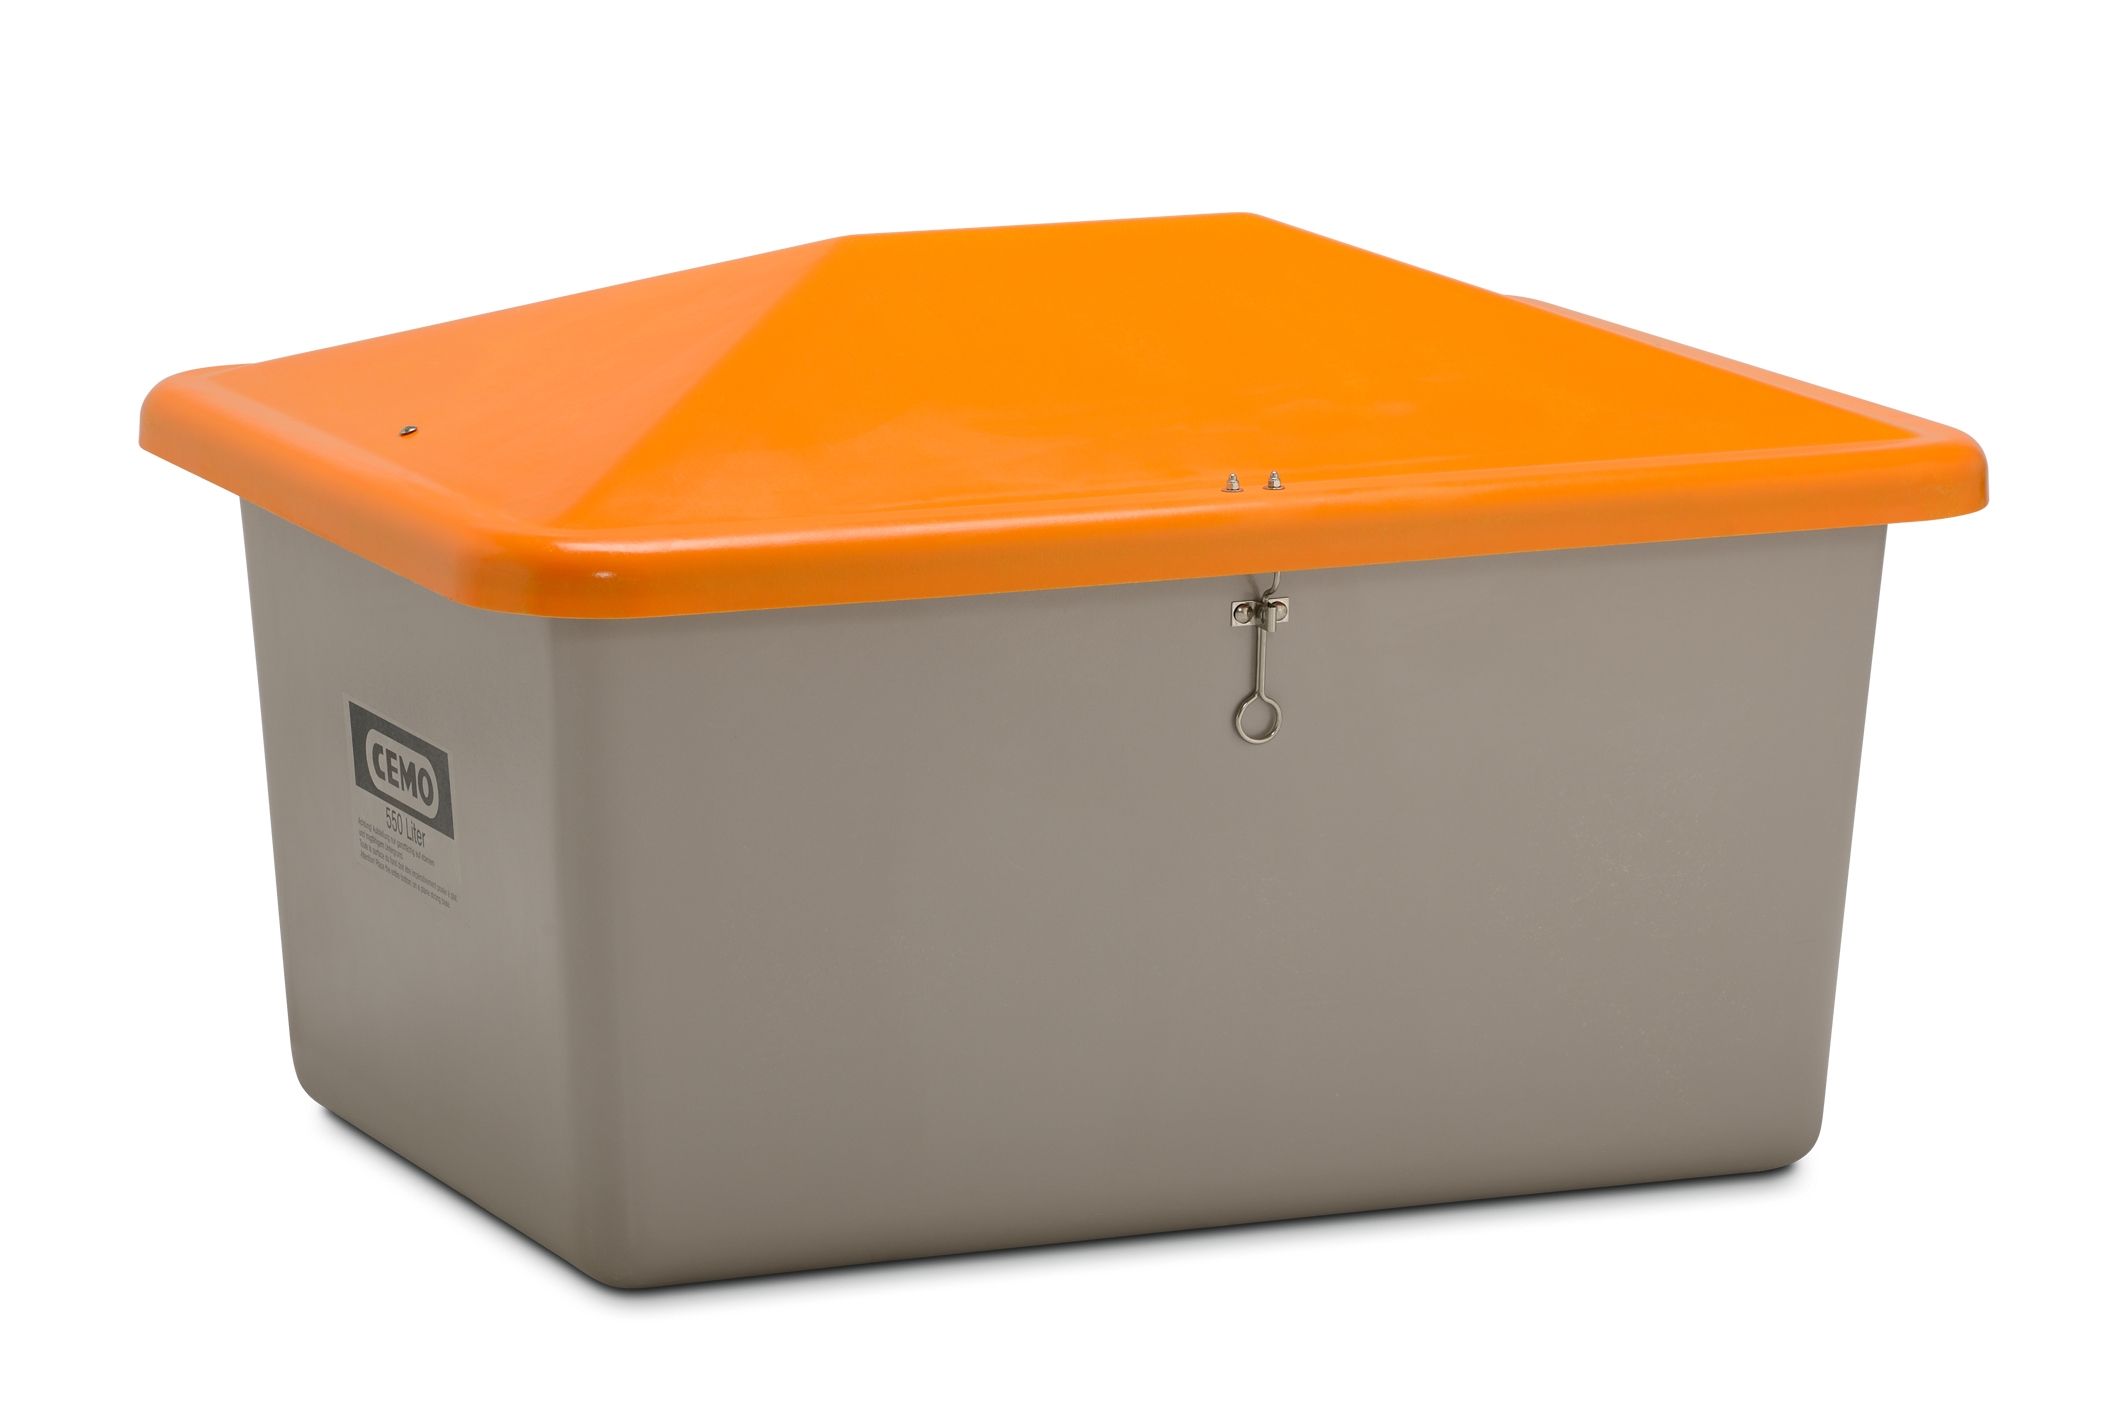 CEMO Streugutbehälter "V" 550 l, grau/orange, mit Vandalismusdeckel - 10896